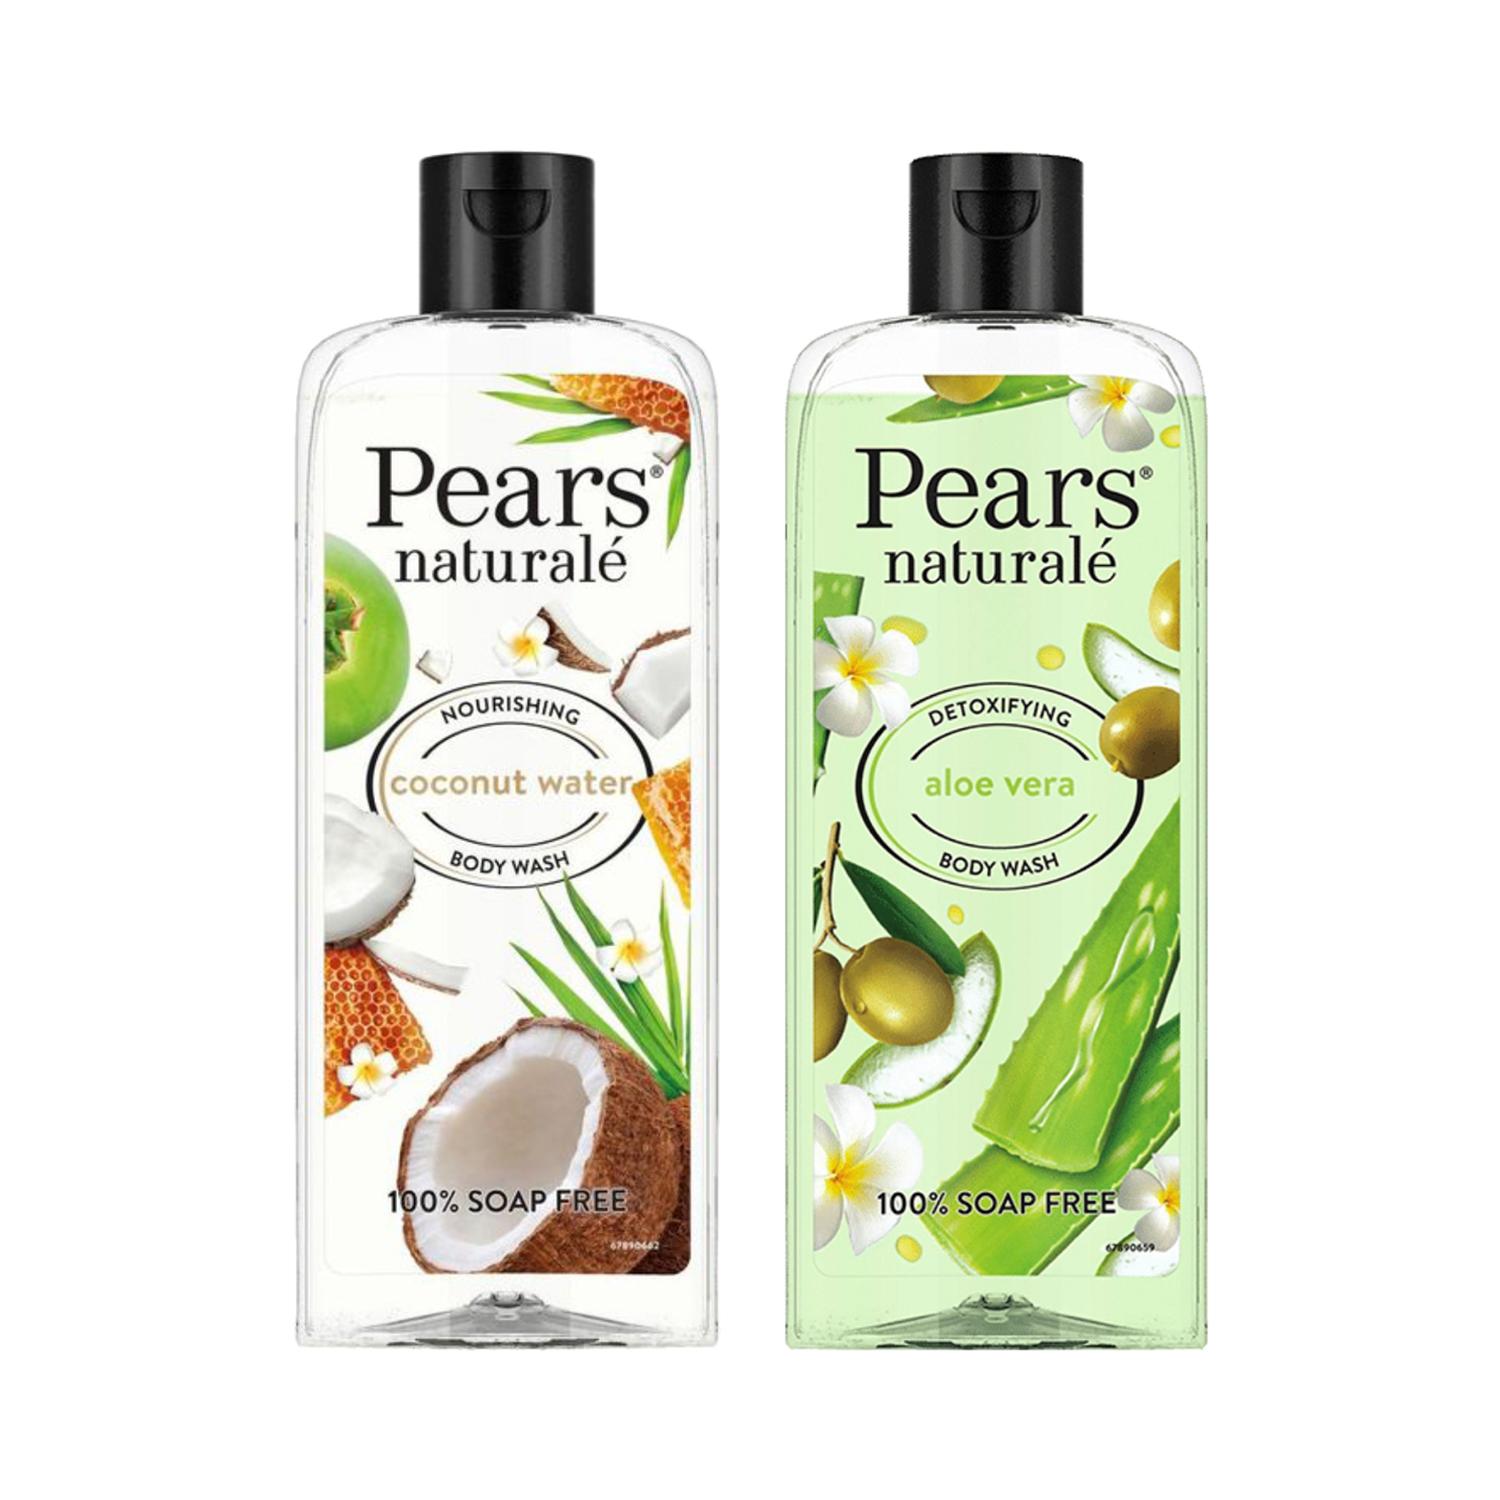 Pears | Pears Naturale Nourishing Coconut Water + Detoxifying Aloevera Bodywash Combo